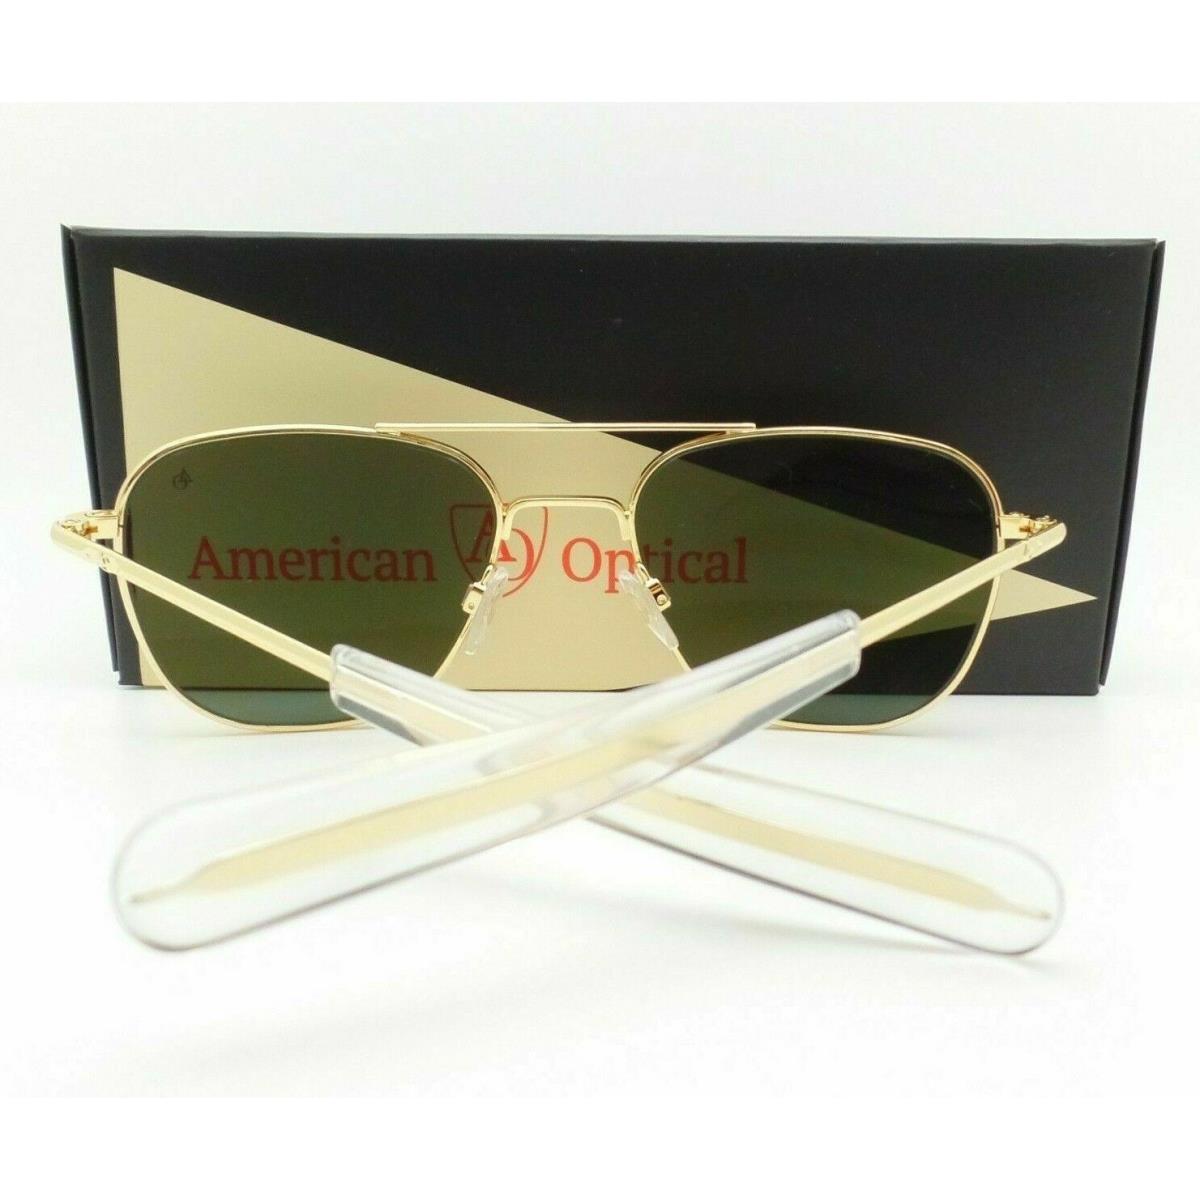 American Optical Original Pilot AO American Optical Pilot 23k Gold Green Lens Options Sunglasses 55/20/140 Nylon Polarized